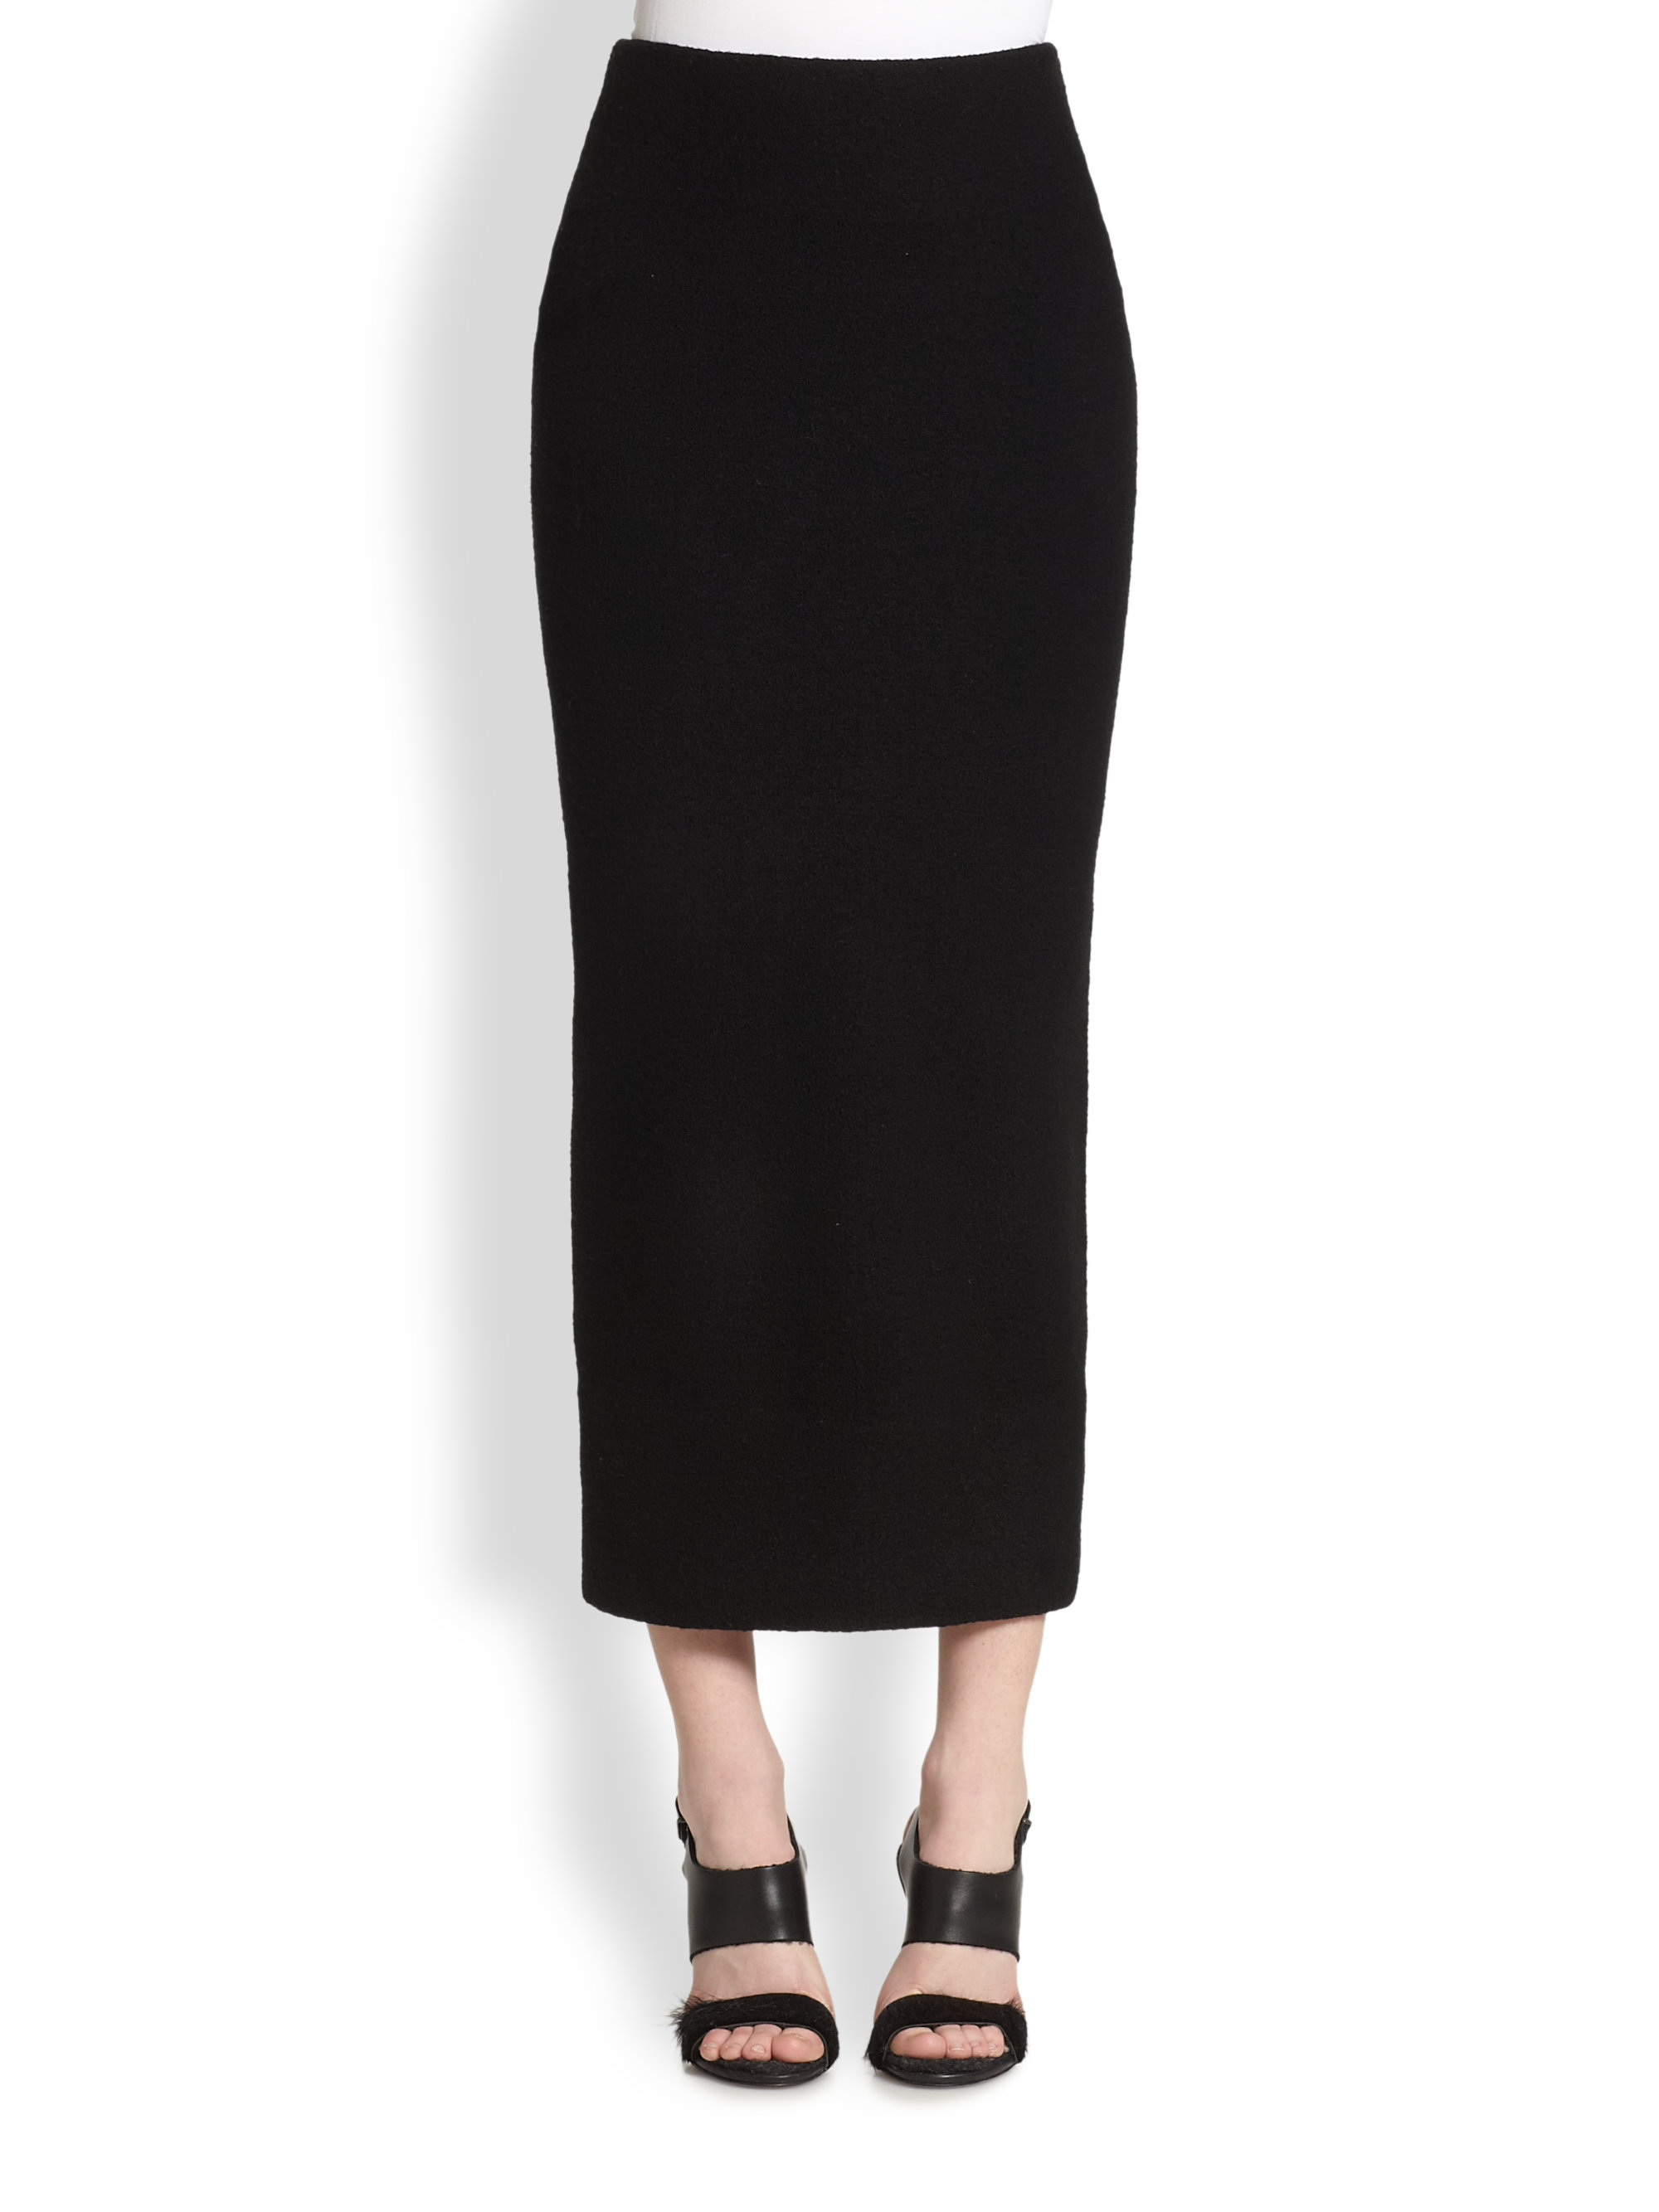 Acne Studios Donna Boiled Wool Zip-Back Column Skirt in Black - Lyst